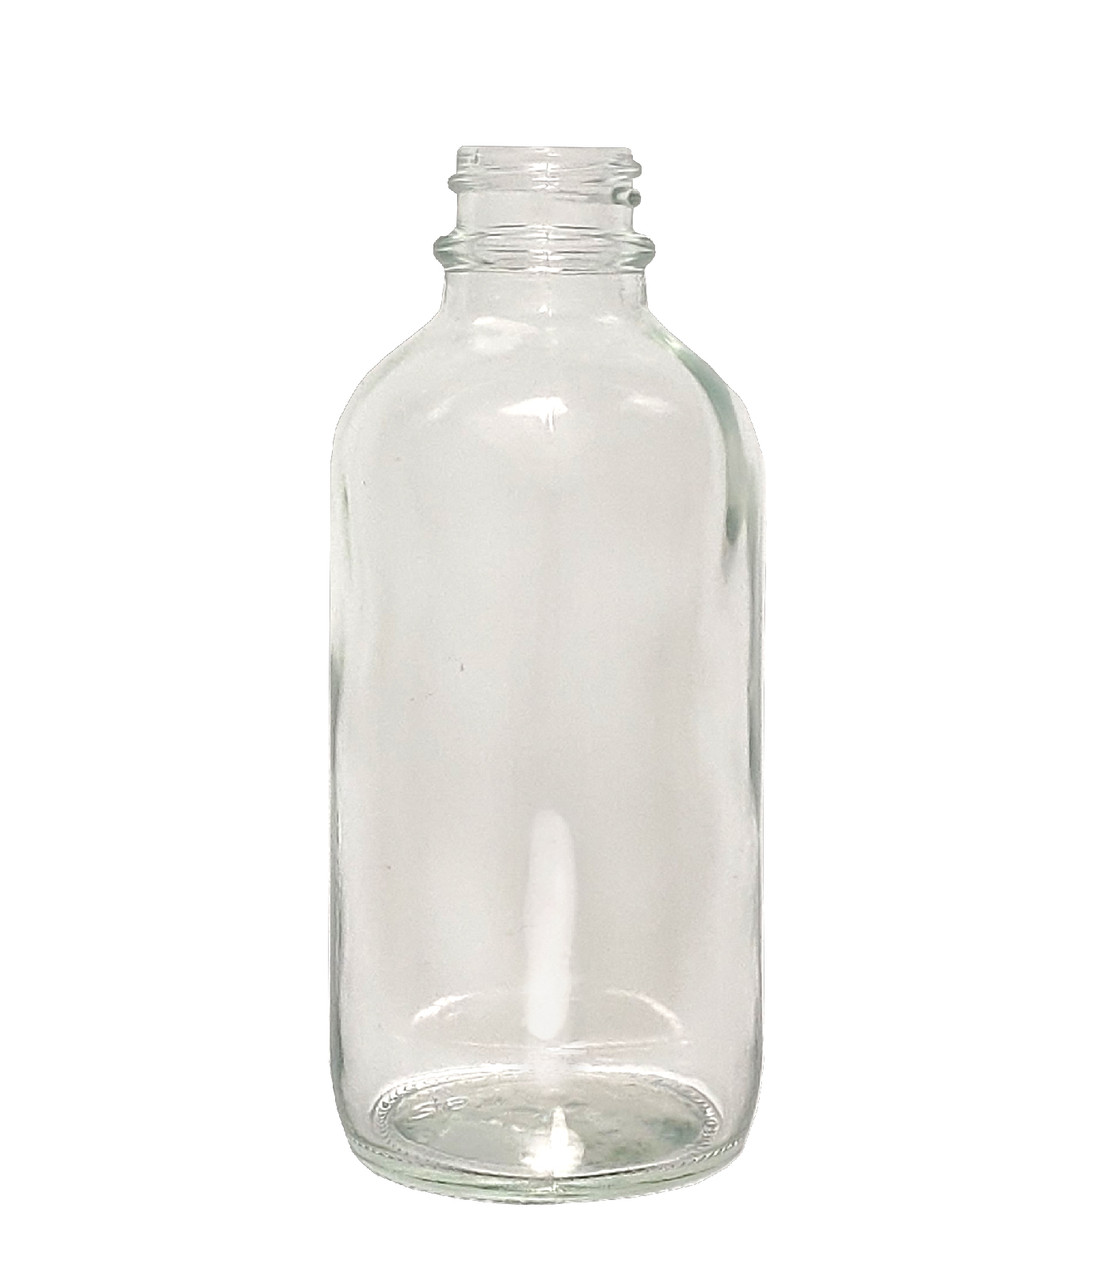 85 mL (3 oz) Boston Round Clear Glass Bottle 22-400